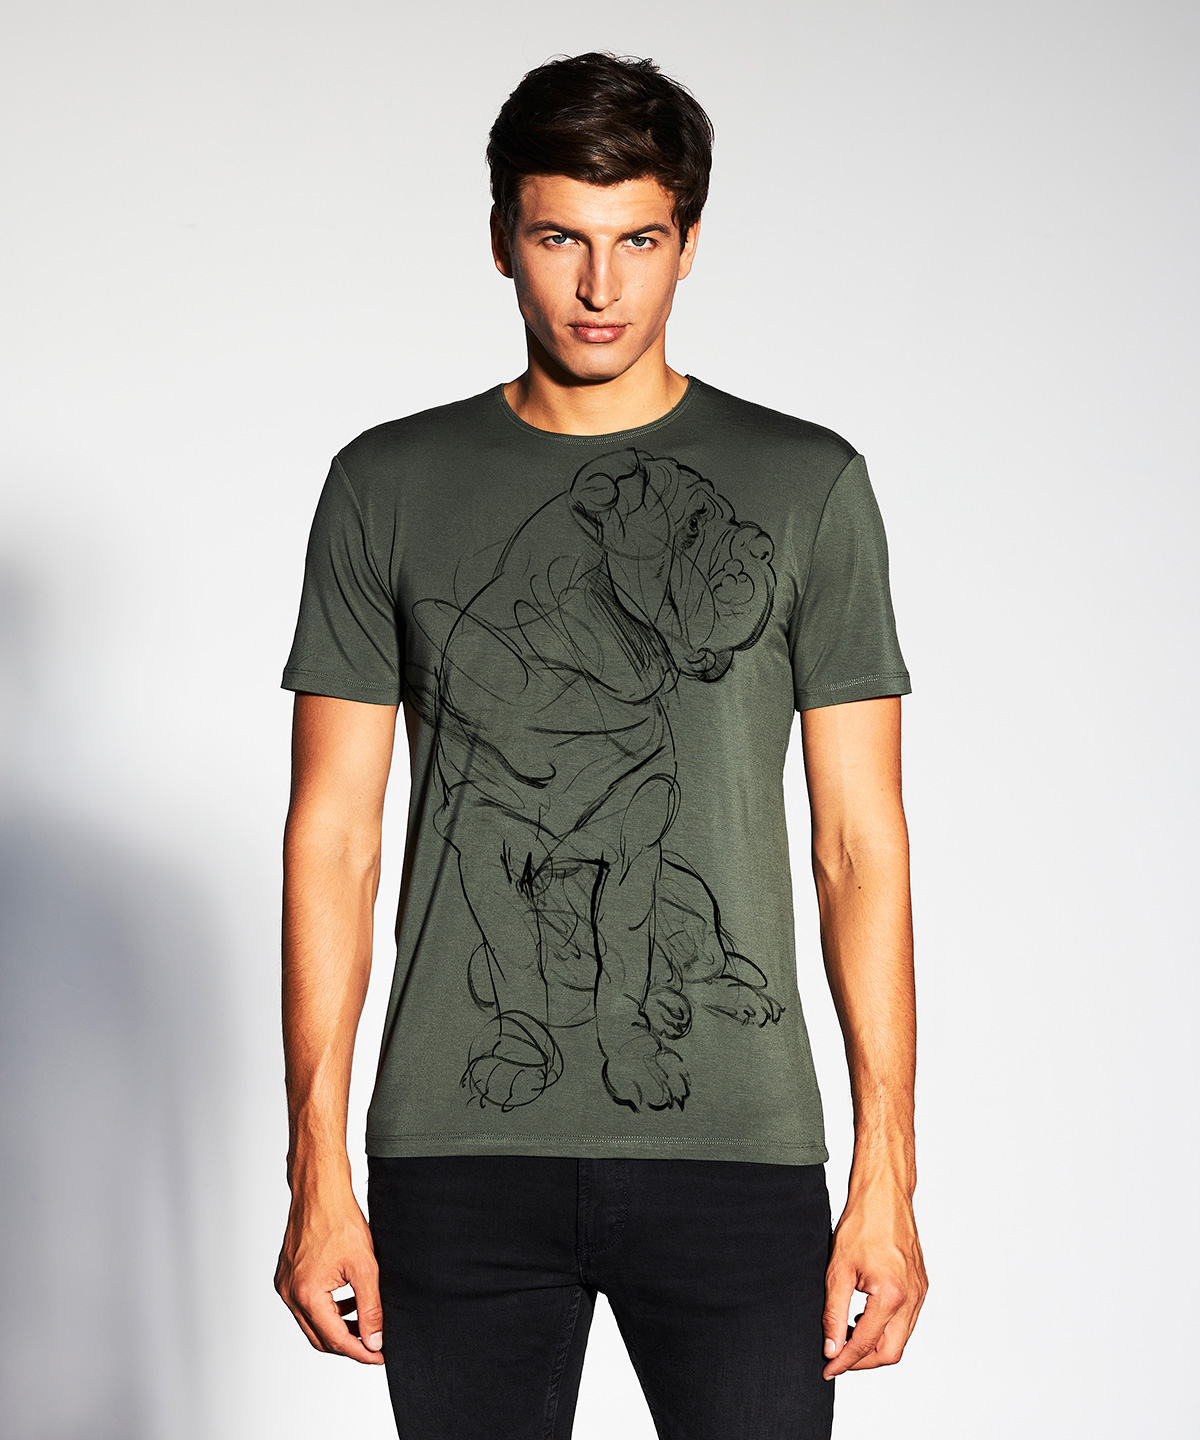 Neapolitan mastiff khaki t-shirt MAN